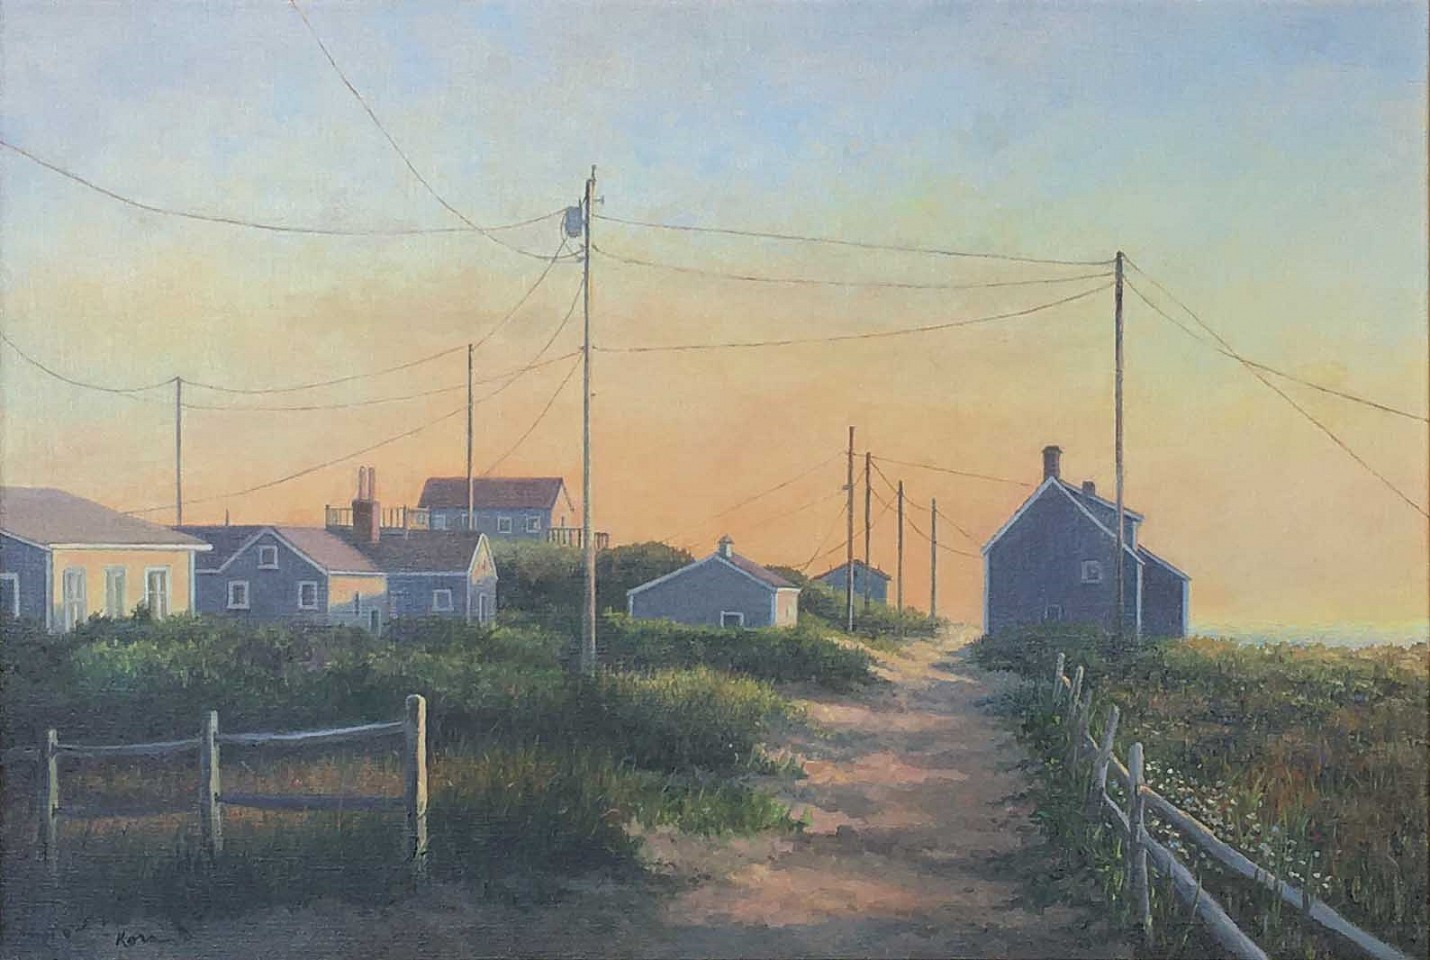 Marla Korr, Sunset near Smith's Point II, 2018
oil on canvas, 24 x 36 in. (61 x 91.4 cm)
MK180402